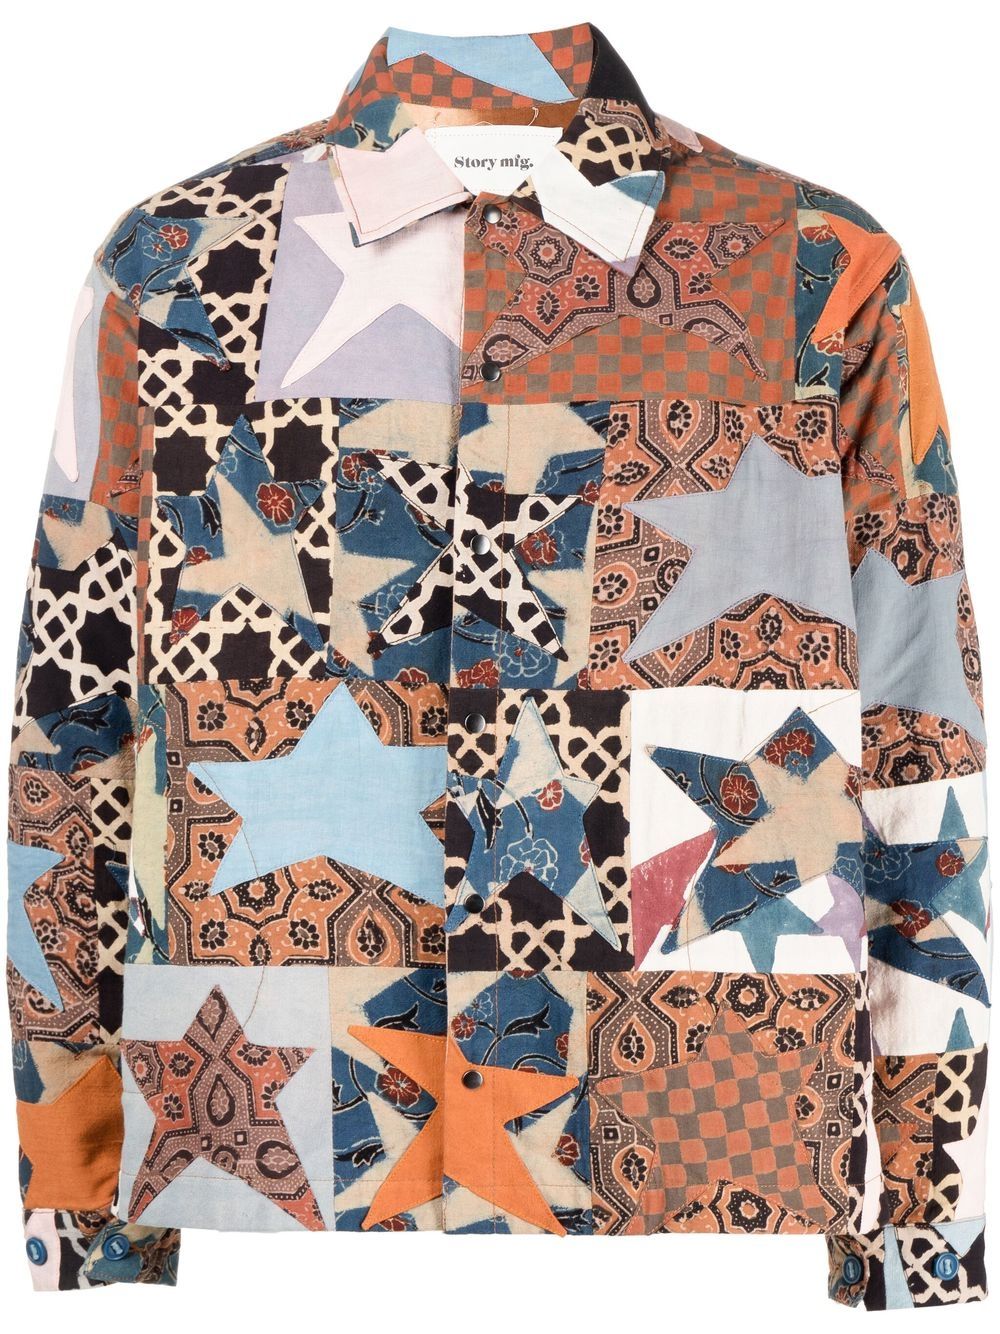 STORY mfg. patchwork-design shirt jacket - Multicolour von STORY mfg.